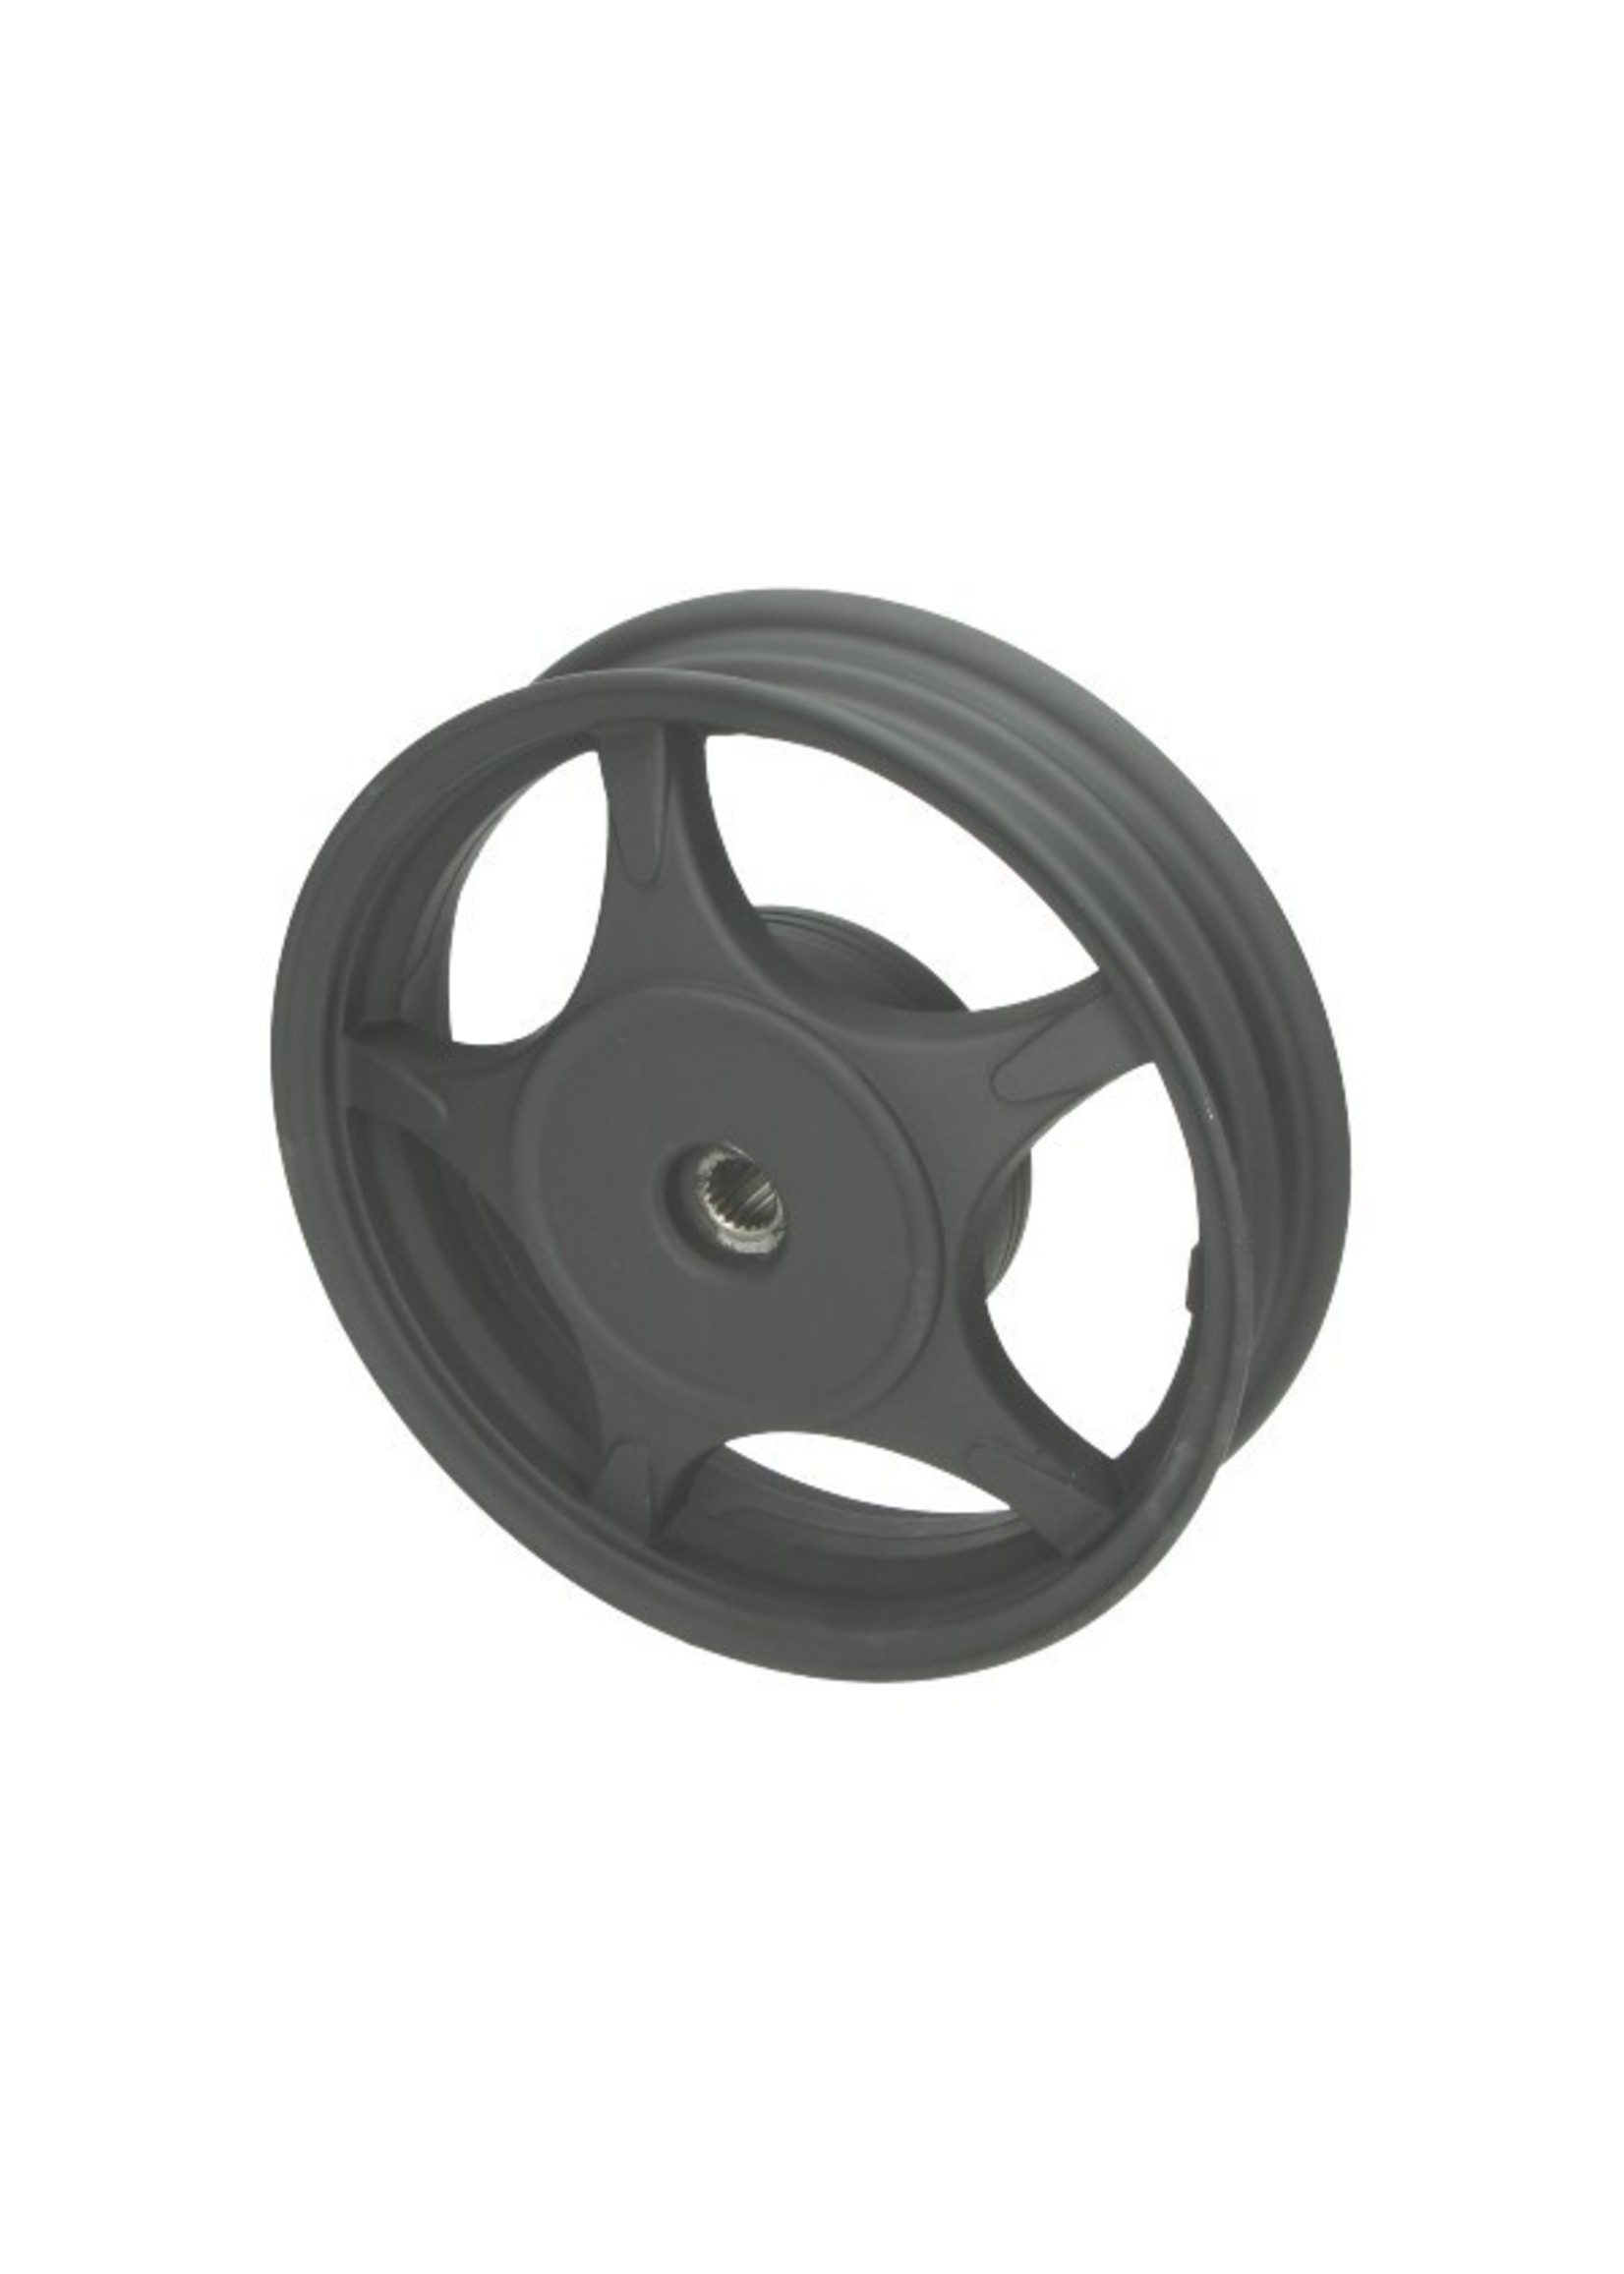 Benzhou wiel achter china4t/sp50 10 inch zwart mat